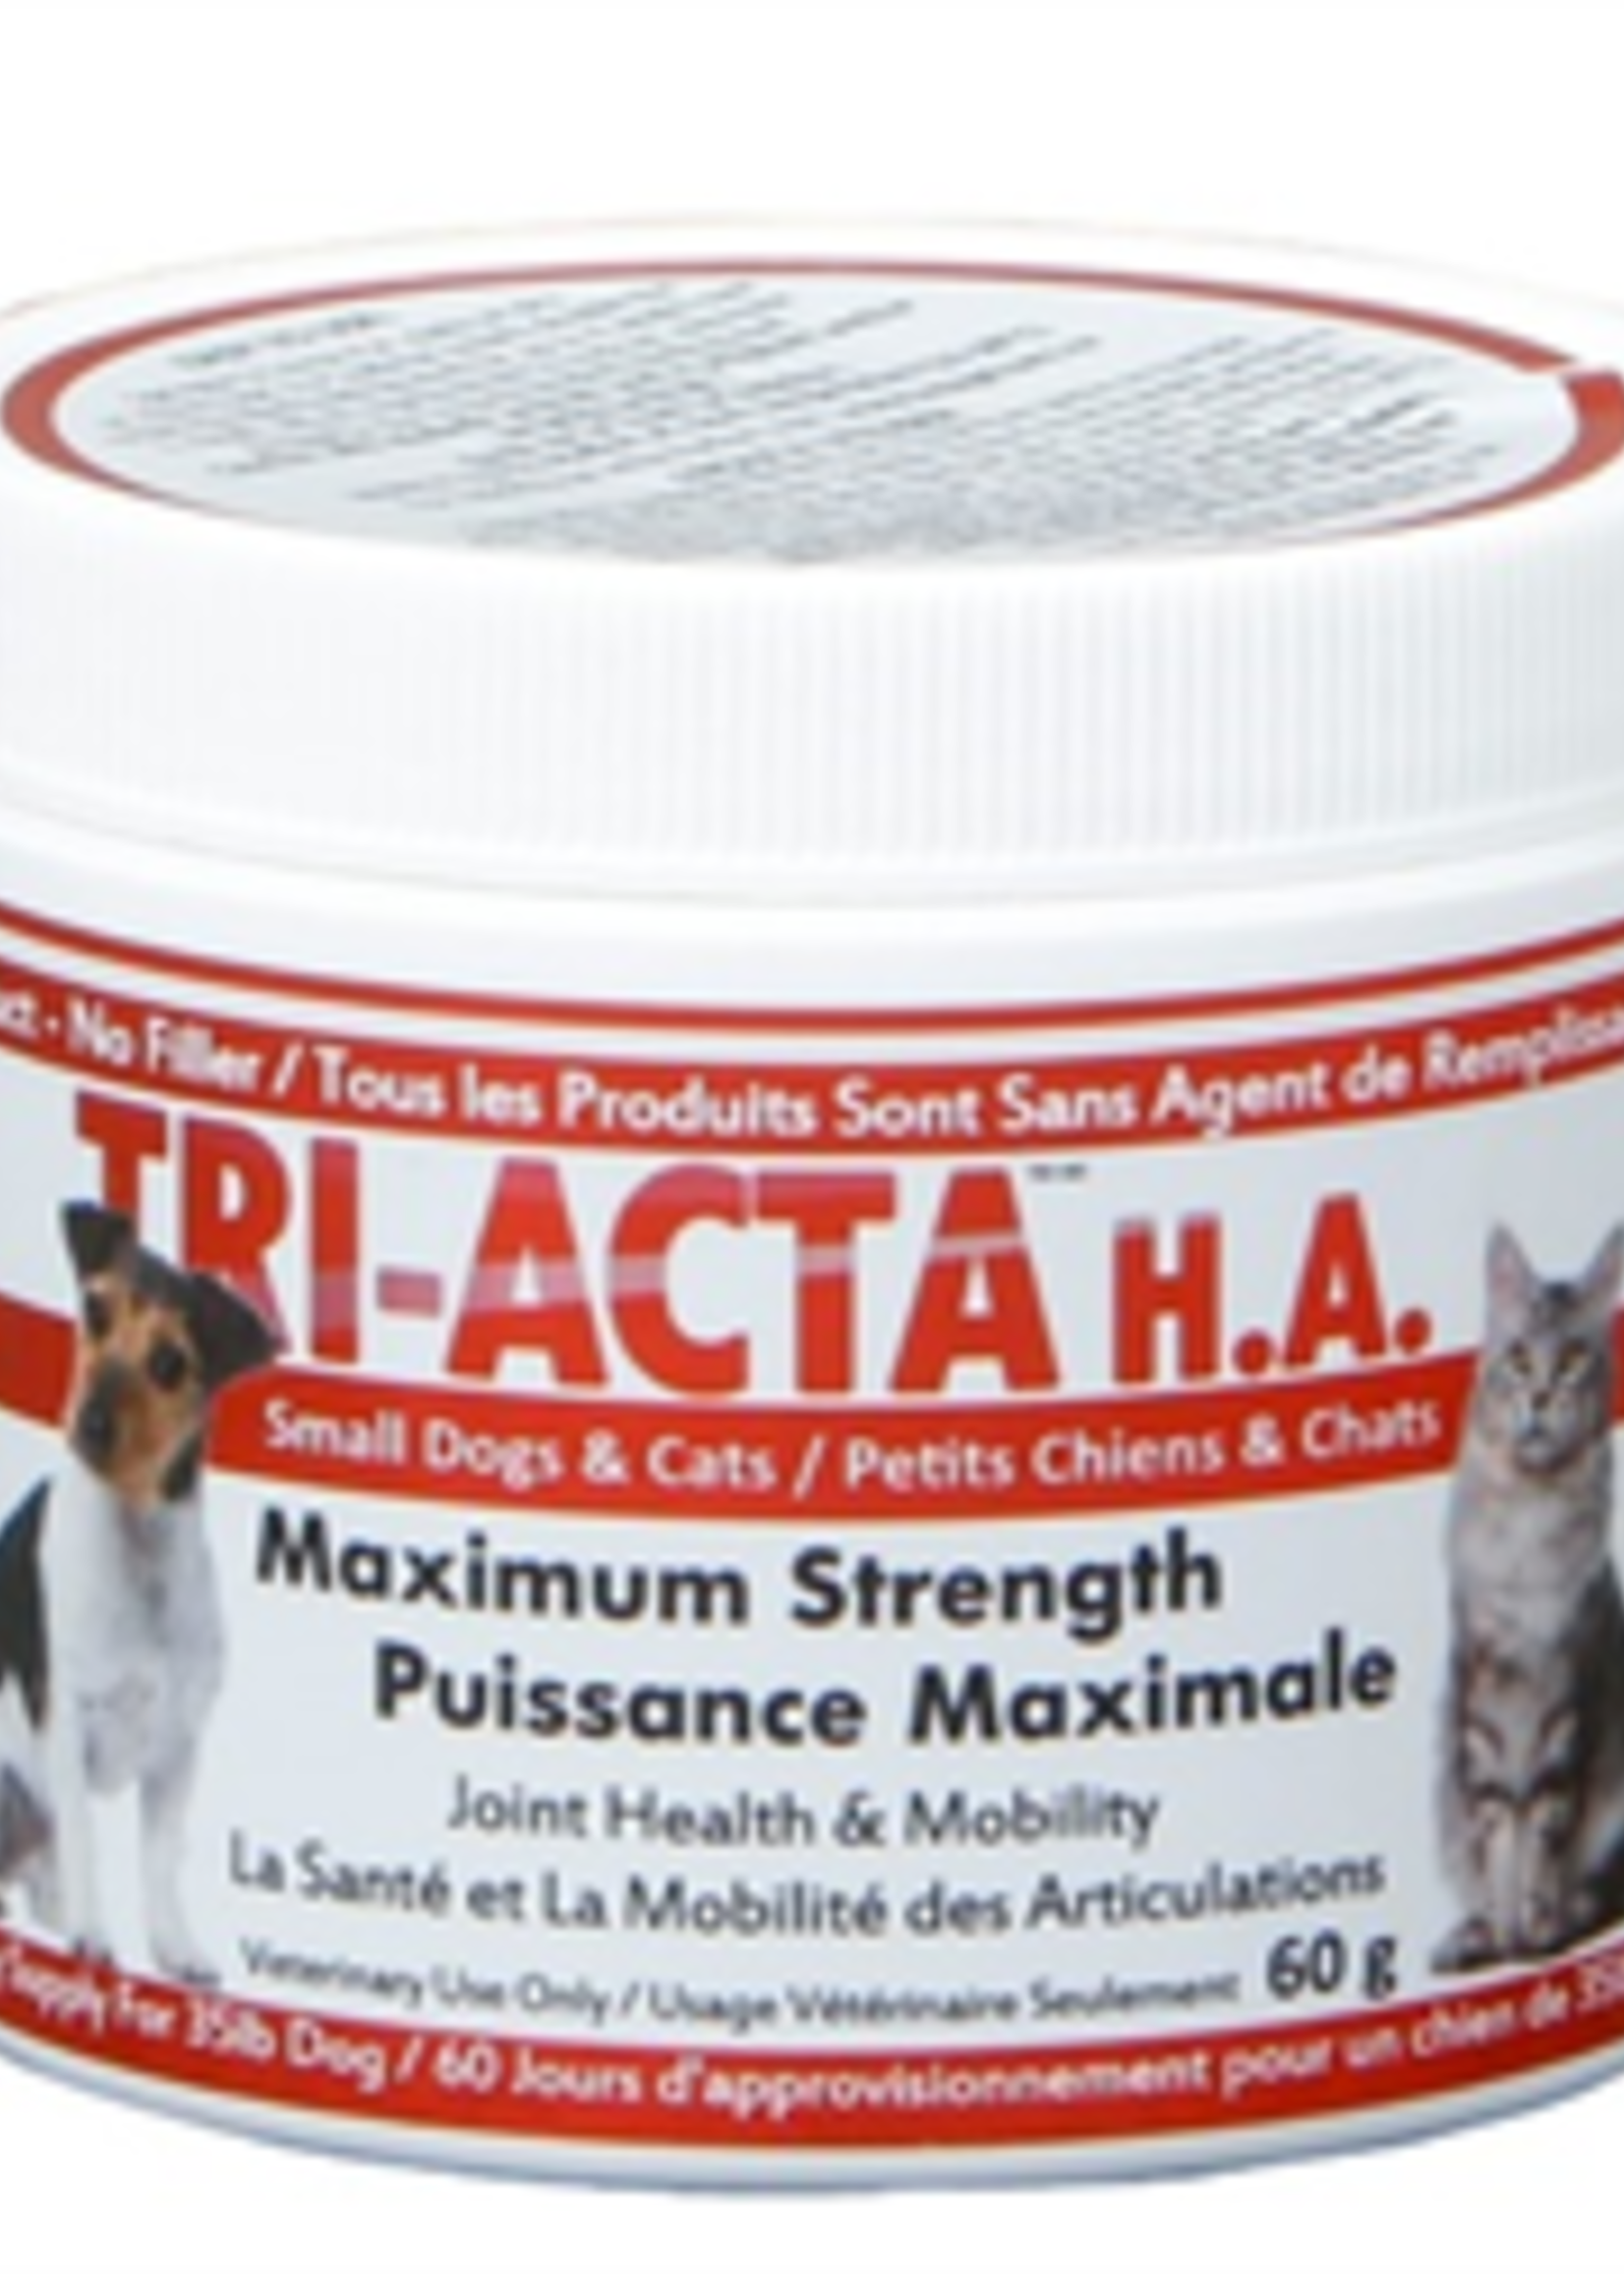 Integricare Tri-Acta™ H.A. Maximum Strength 60g